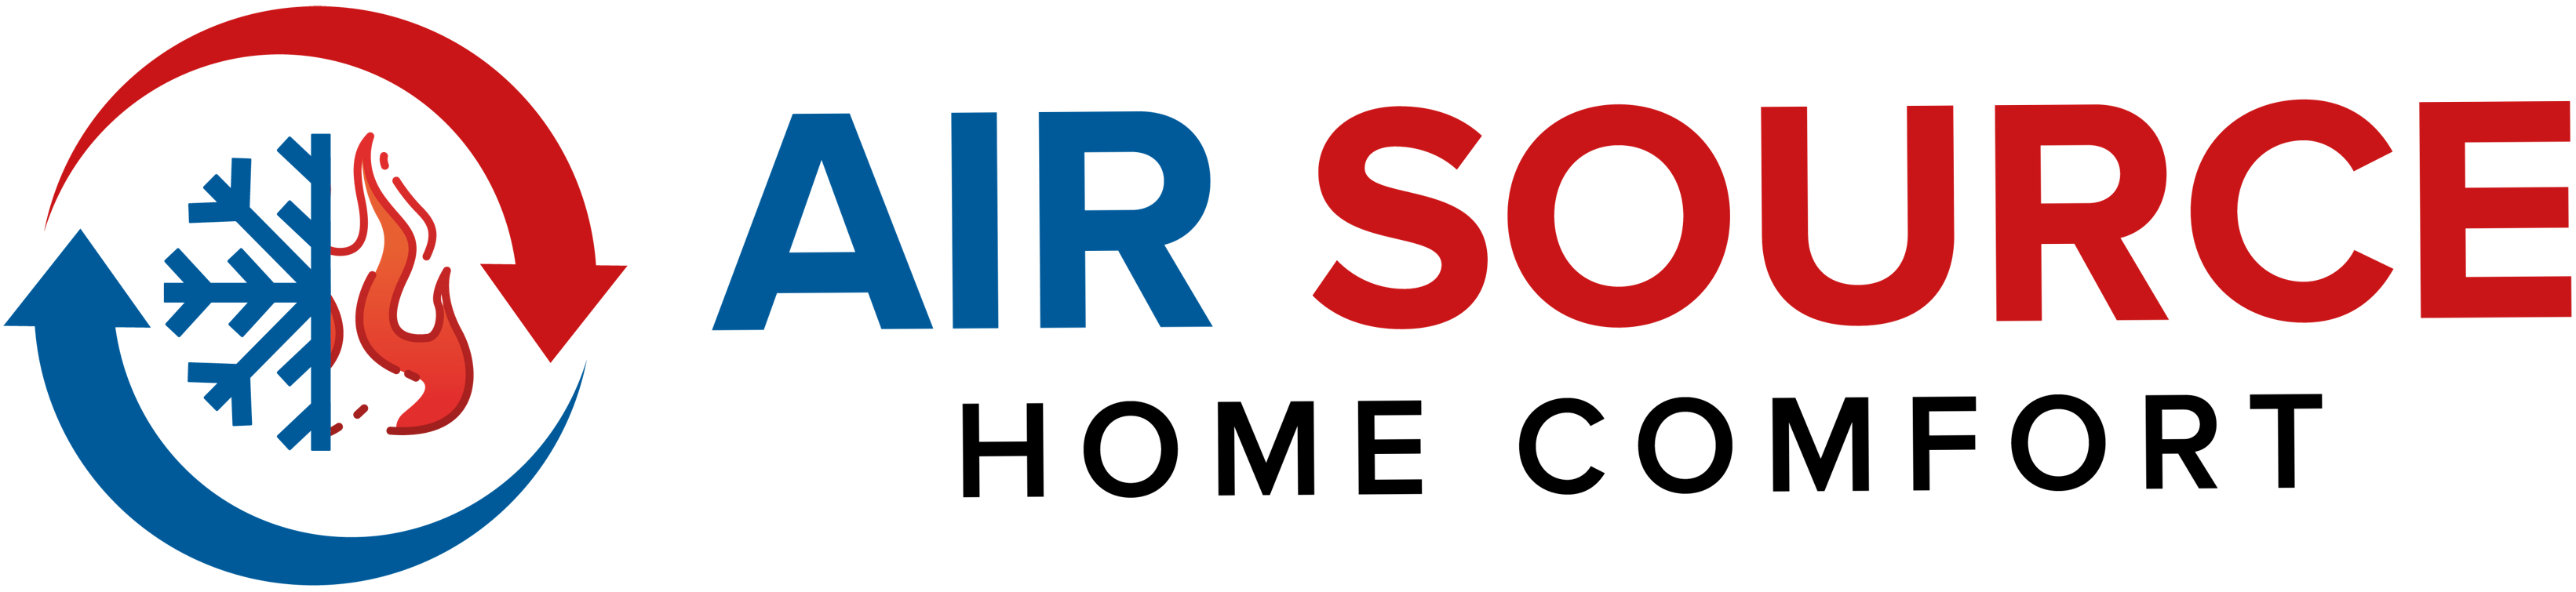 Air-Source-Home-Comfort-logo